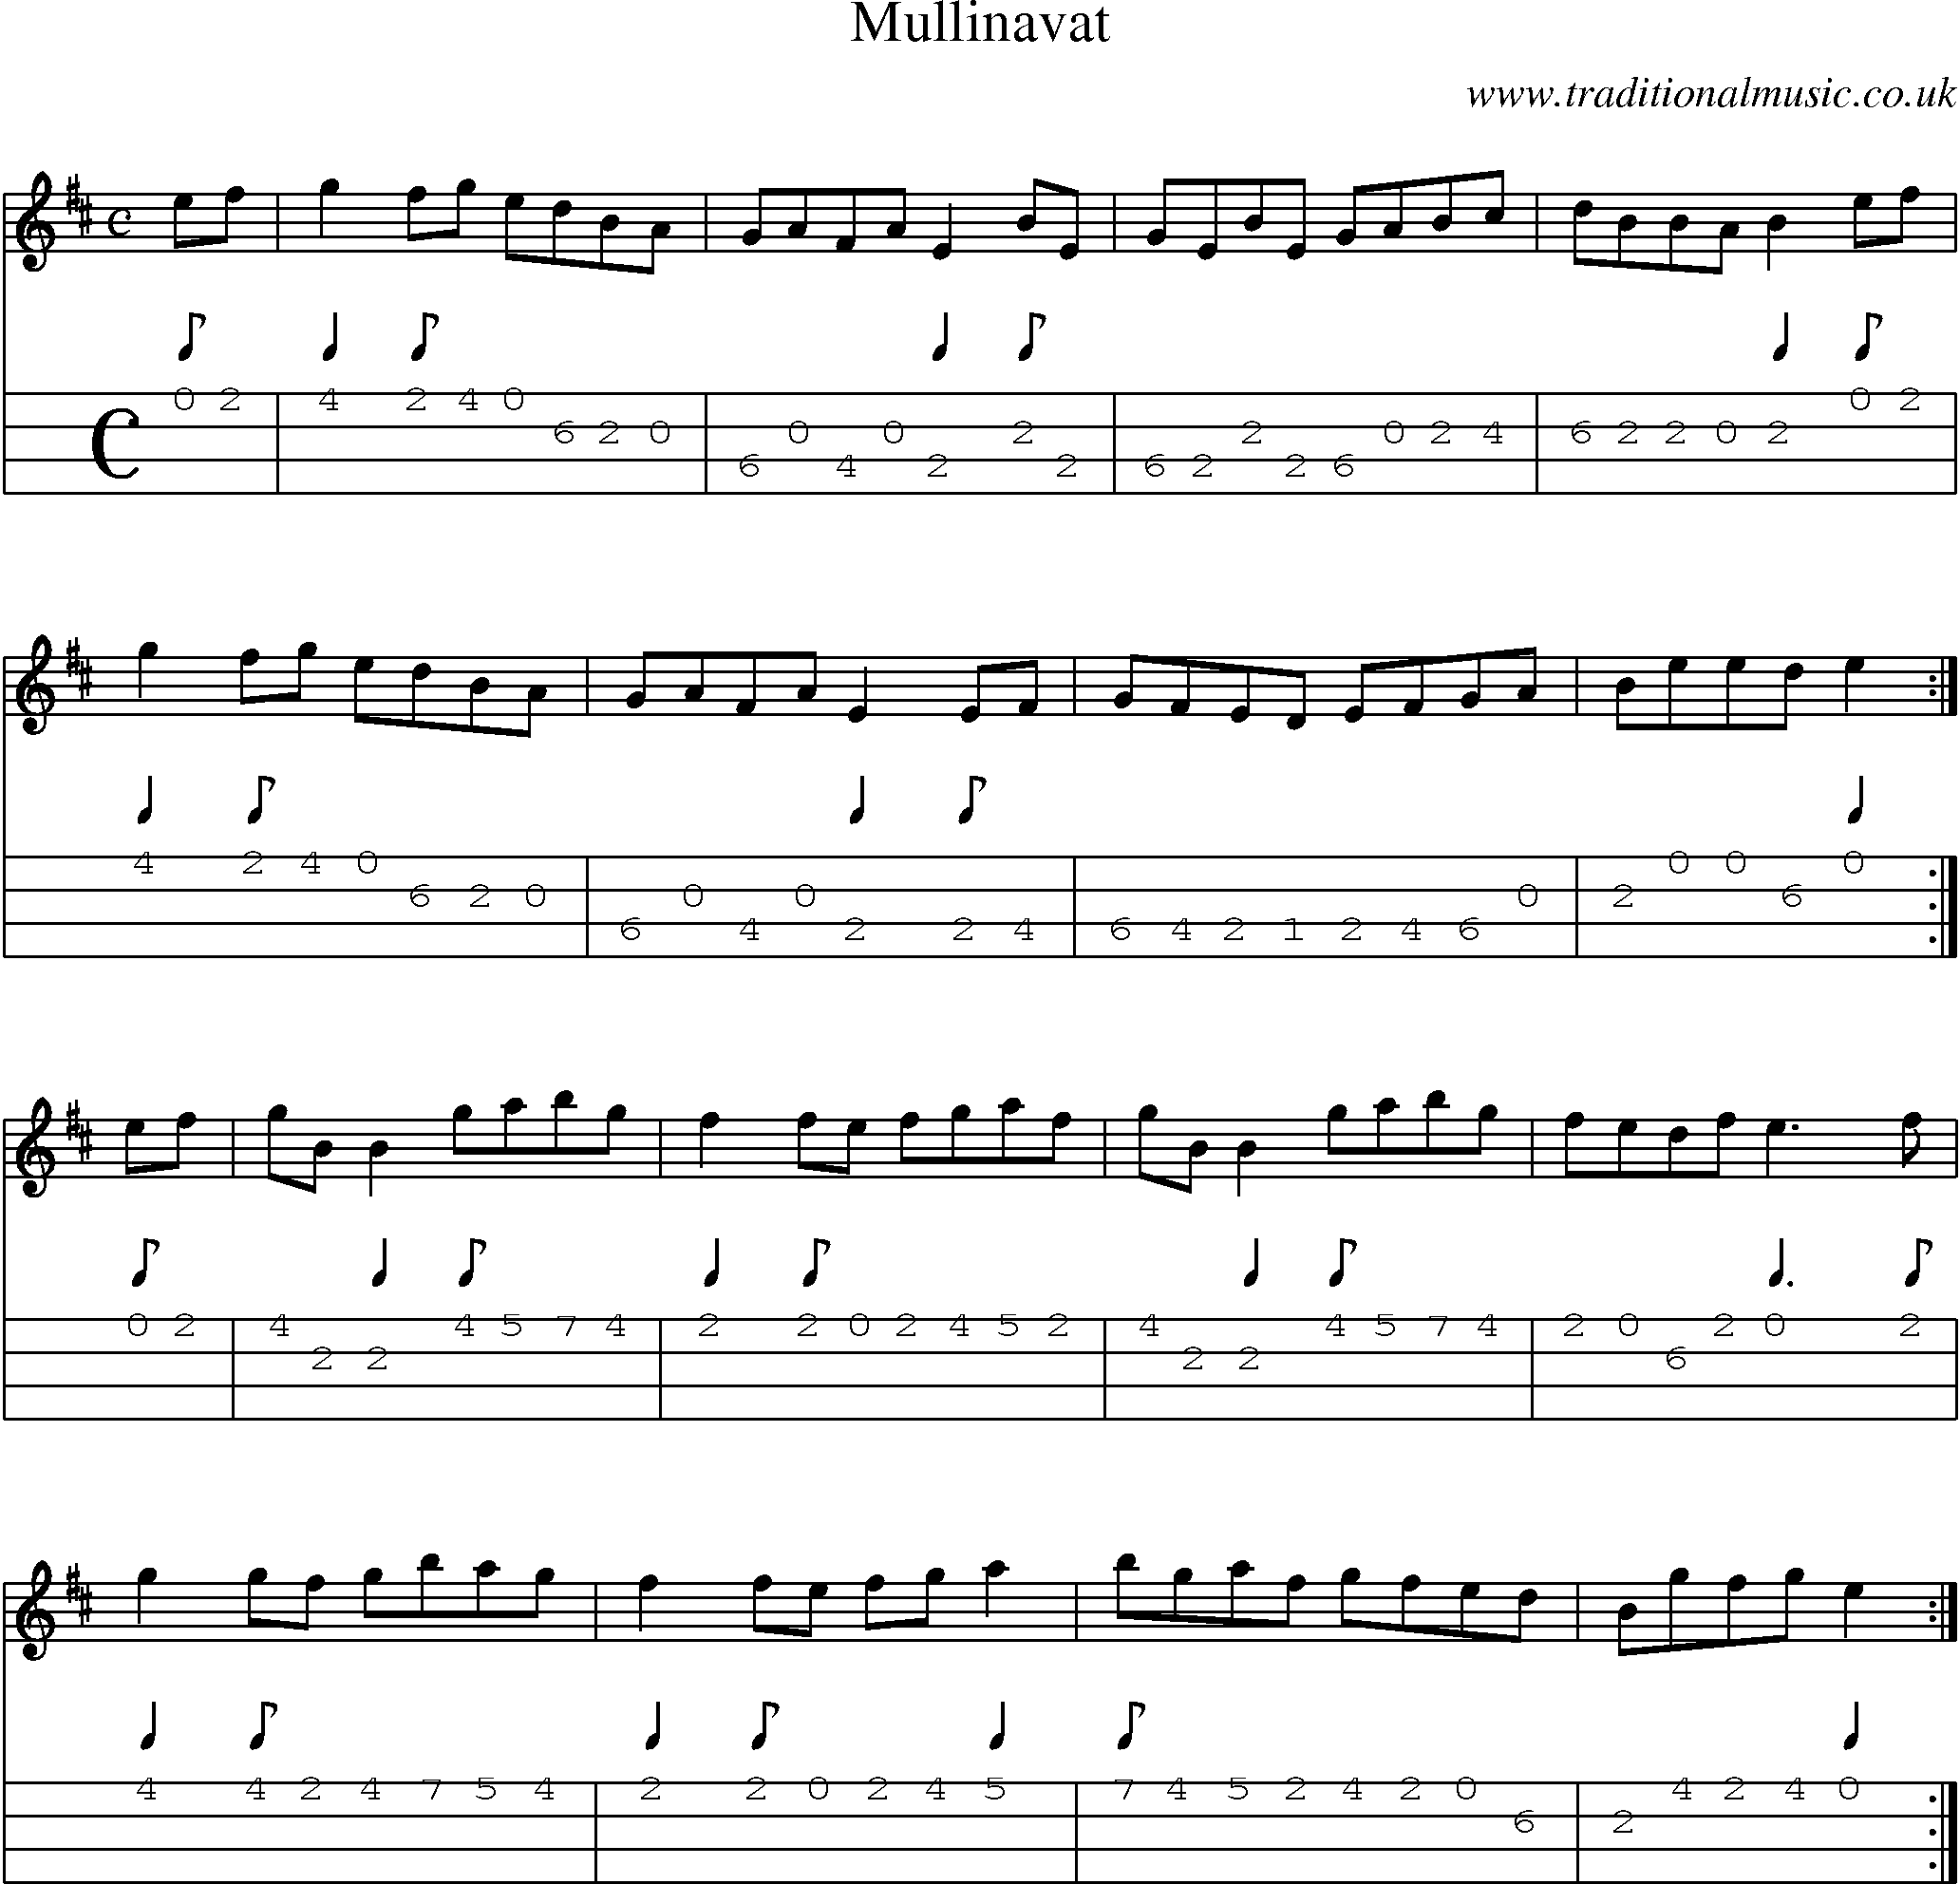 Music Score and Mandolin Tabs for Mullinavat